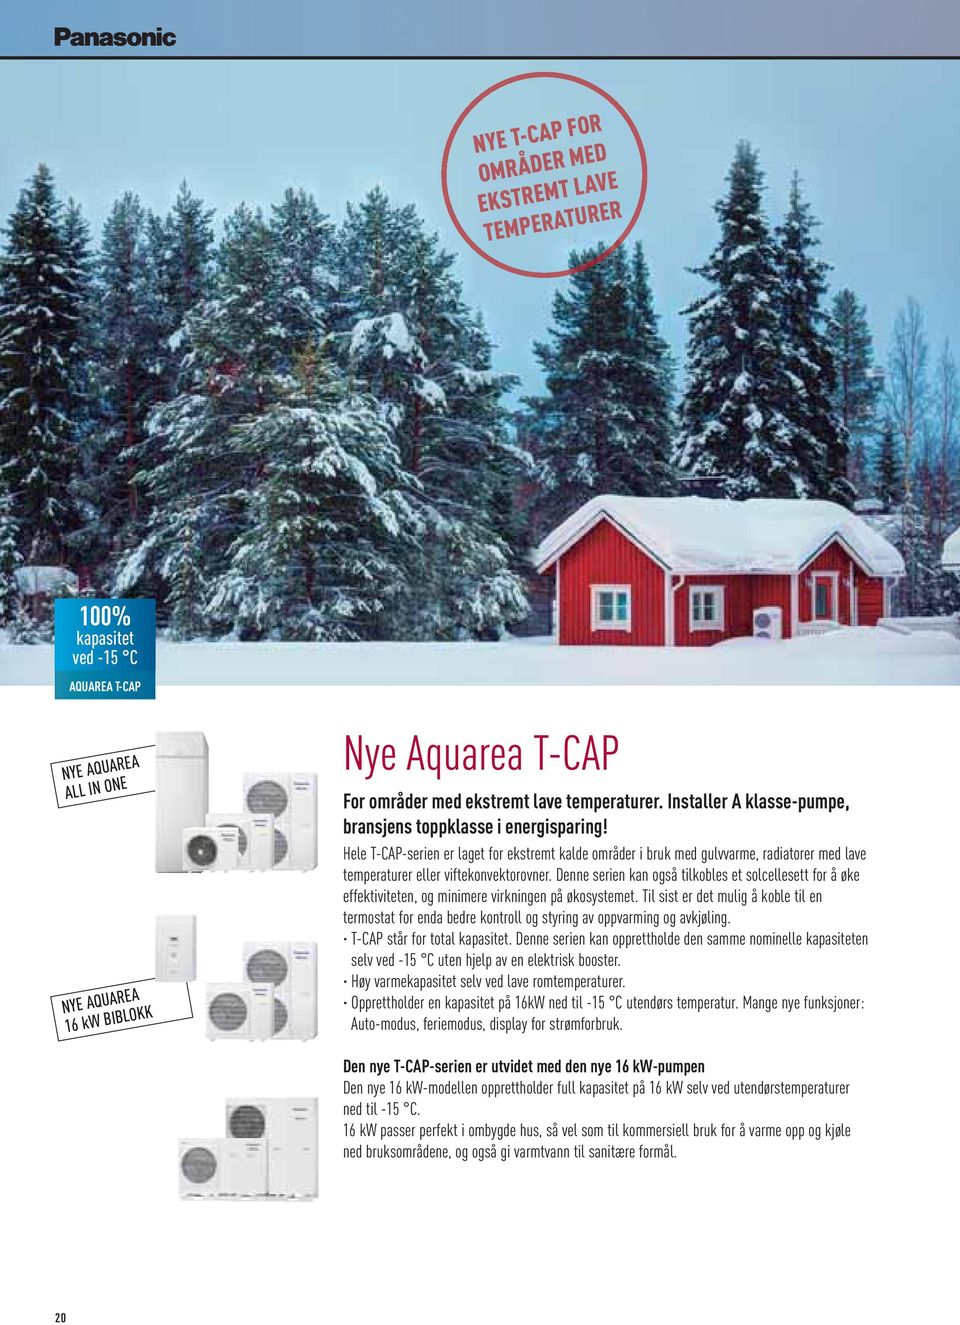 Hele T-CAP-serien er laget for ekstremt kalde områder i bruk med gulvvarme, radiatorer med lave temperaturer eller viftekonvektorovner.